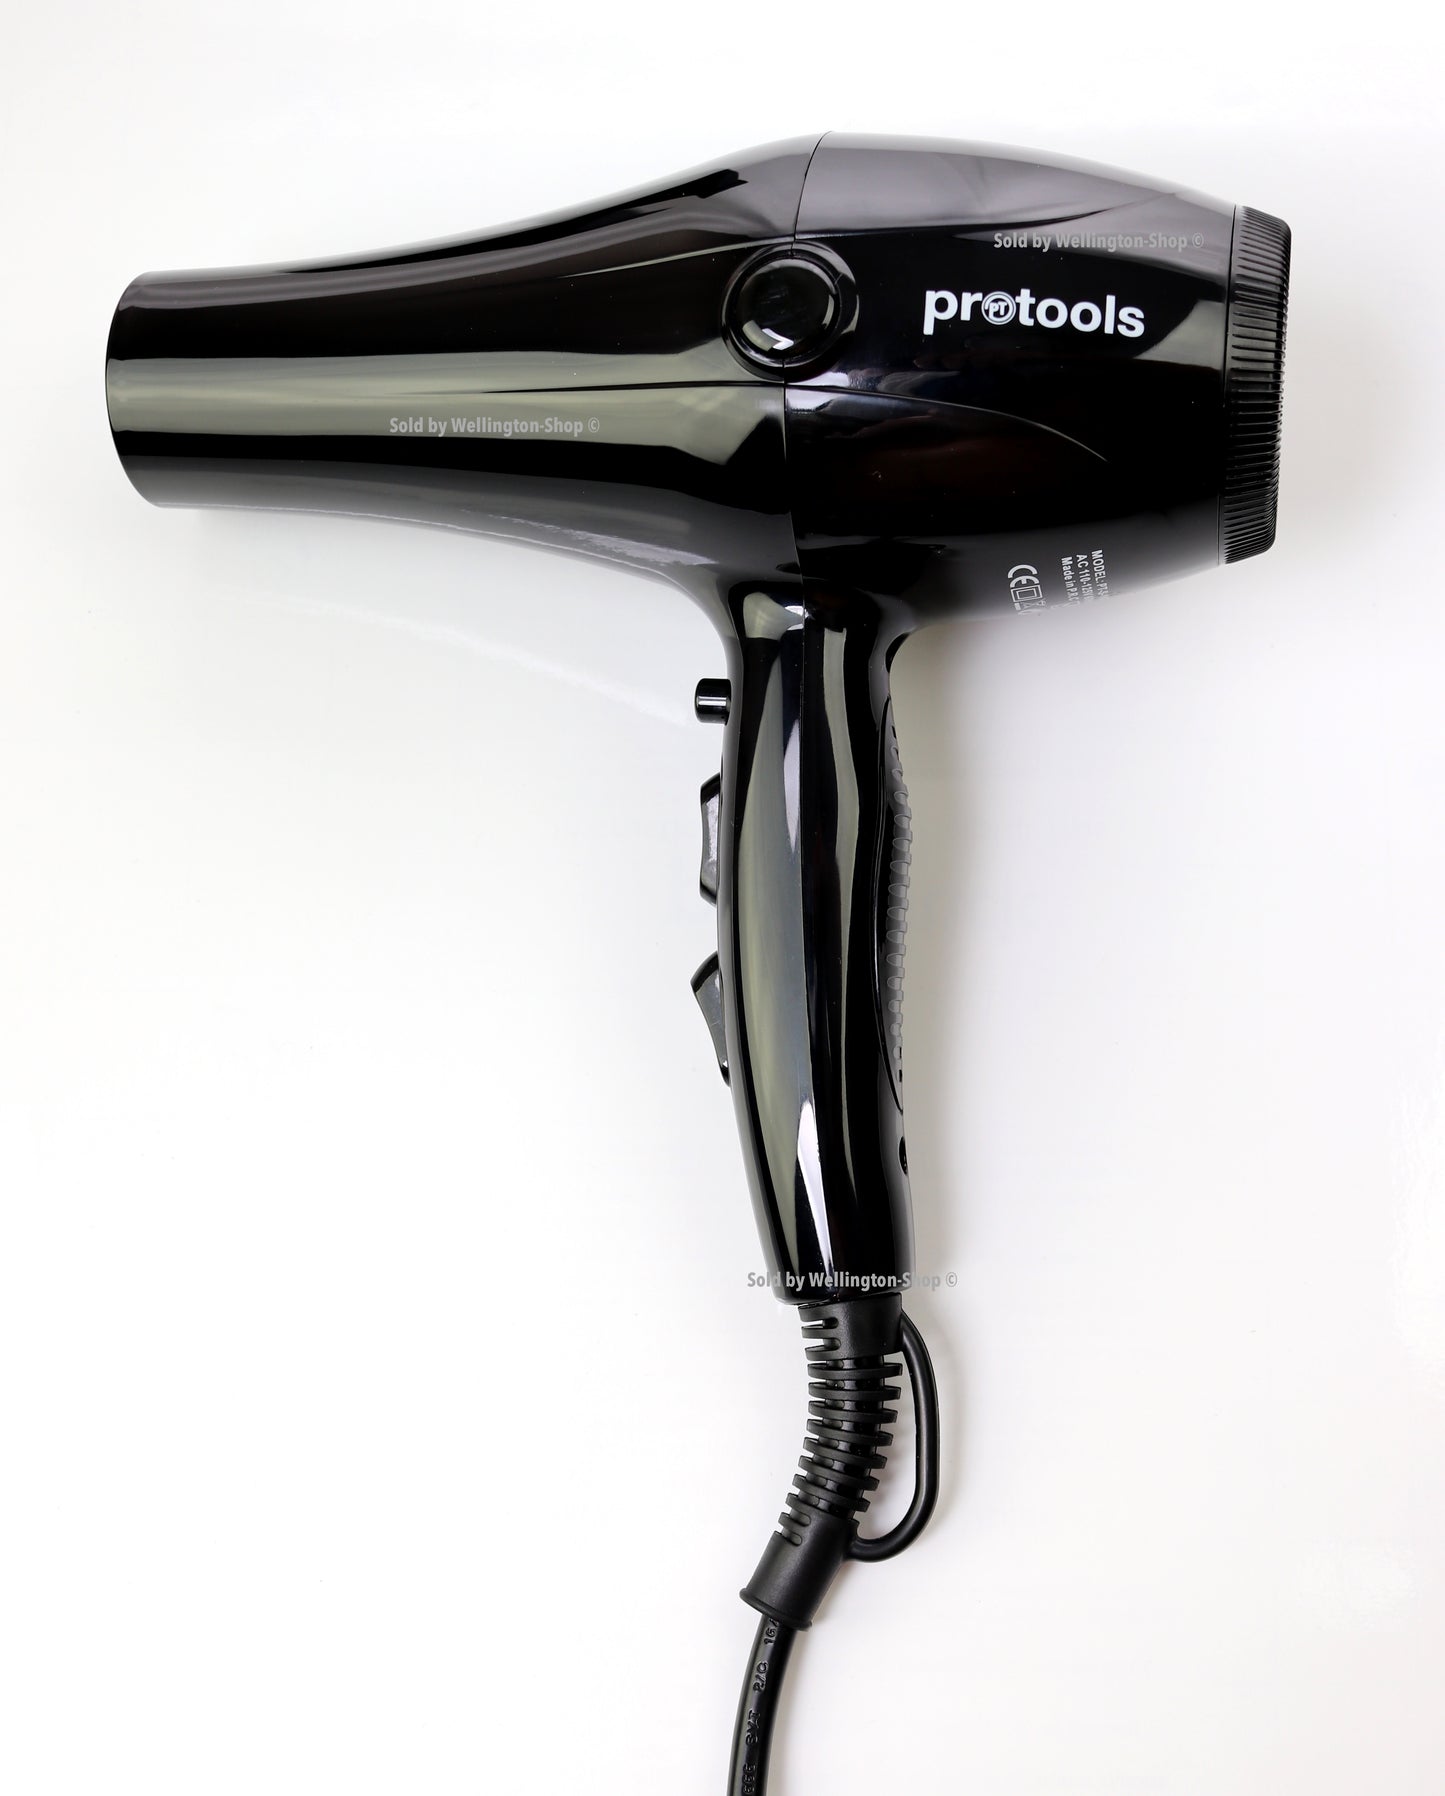 Pebco Protools Ultra light Tourmaline Professional Hair Dryer. 3 Heat Settings